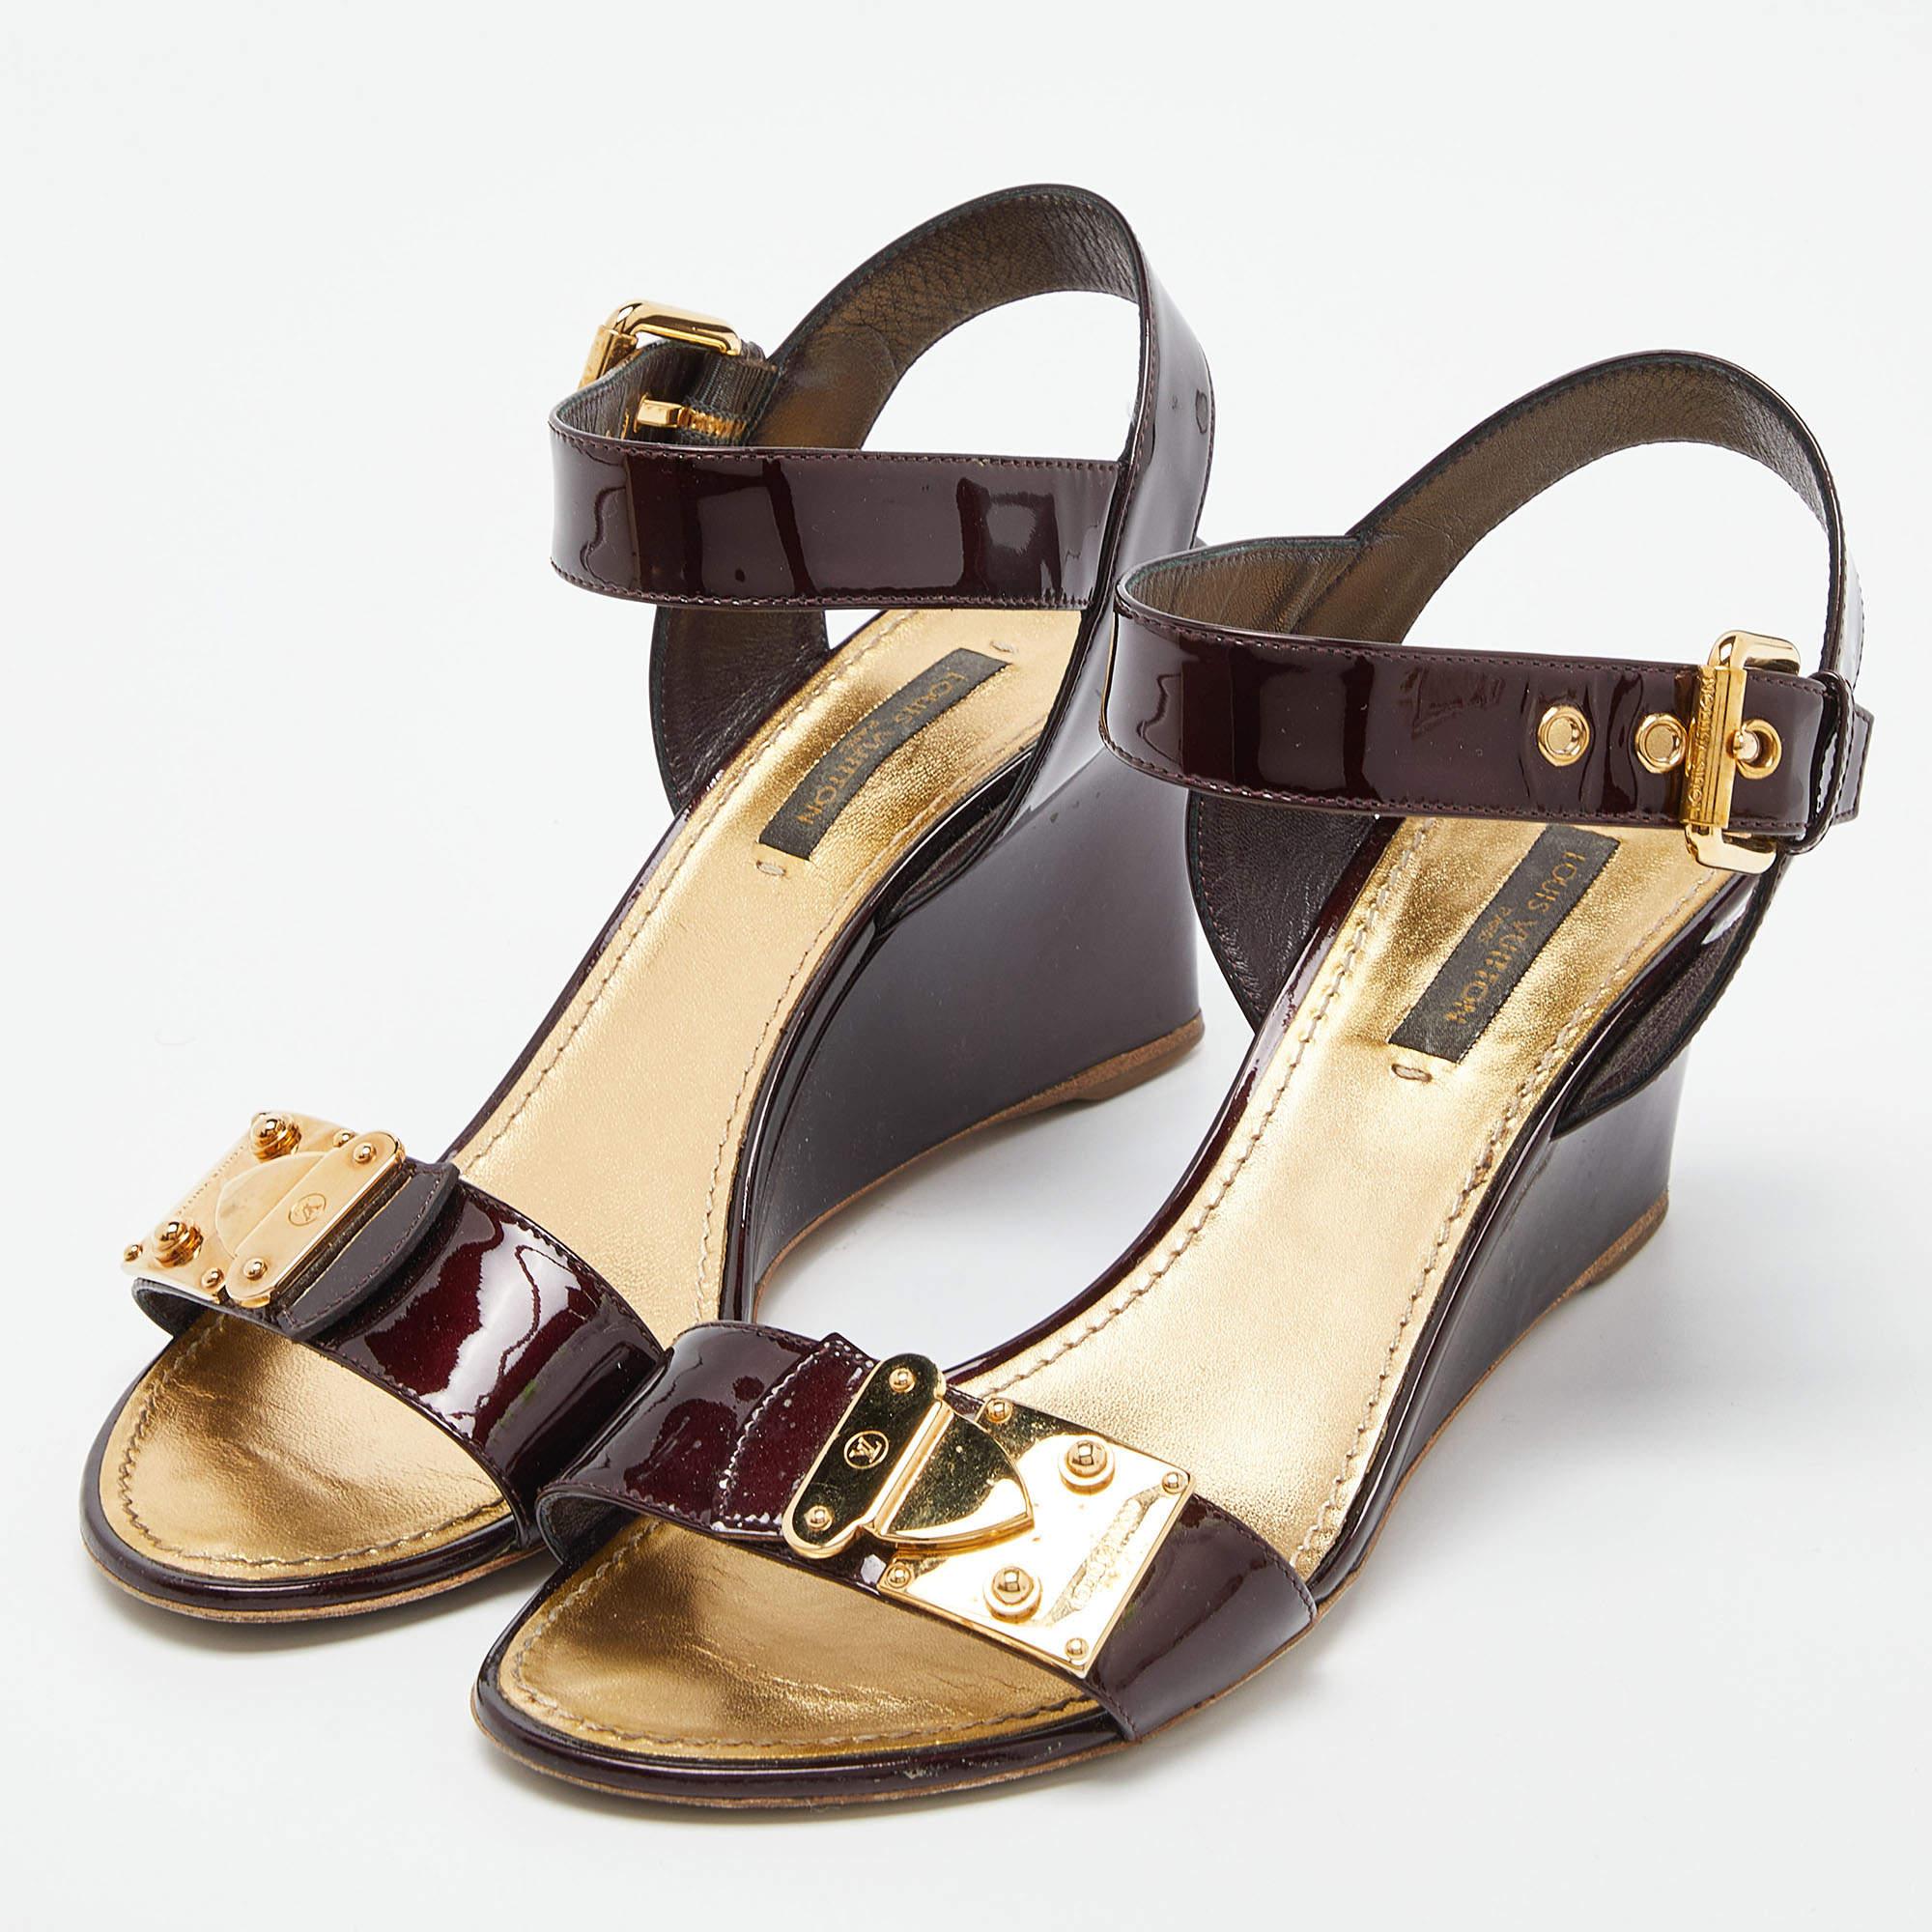 Louis Vuitton Burgundy Patent Leather Wedge Ankle Strap Sandals Size 37 In Good Condition For Sale In Dubai, Al Qouz 2